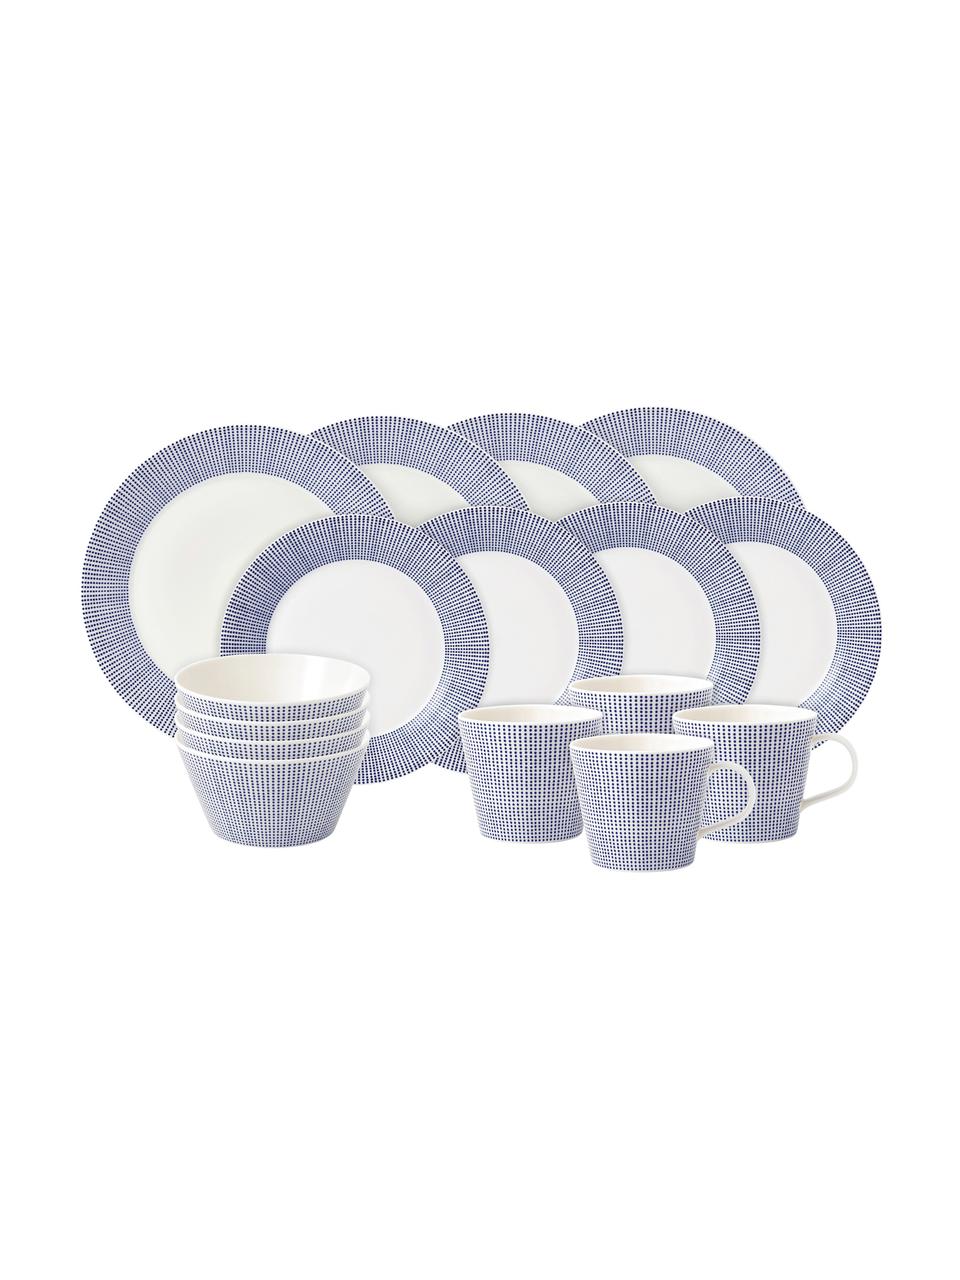 Servizio piatti in porcellana Pacific, set di 16, Porcellana, Bianco, blu, Set in varie misure